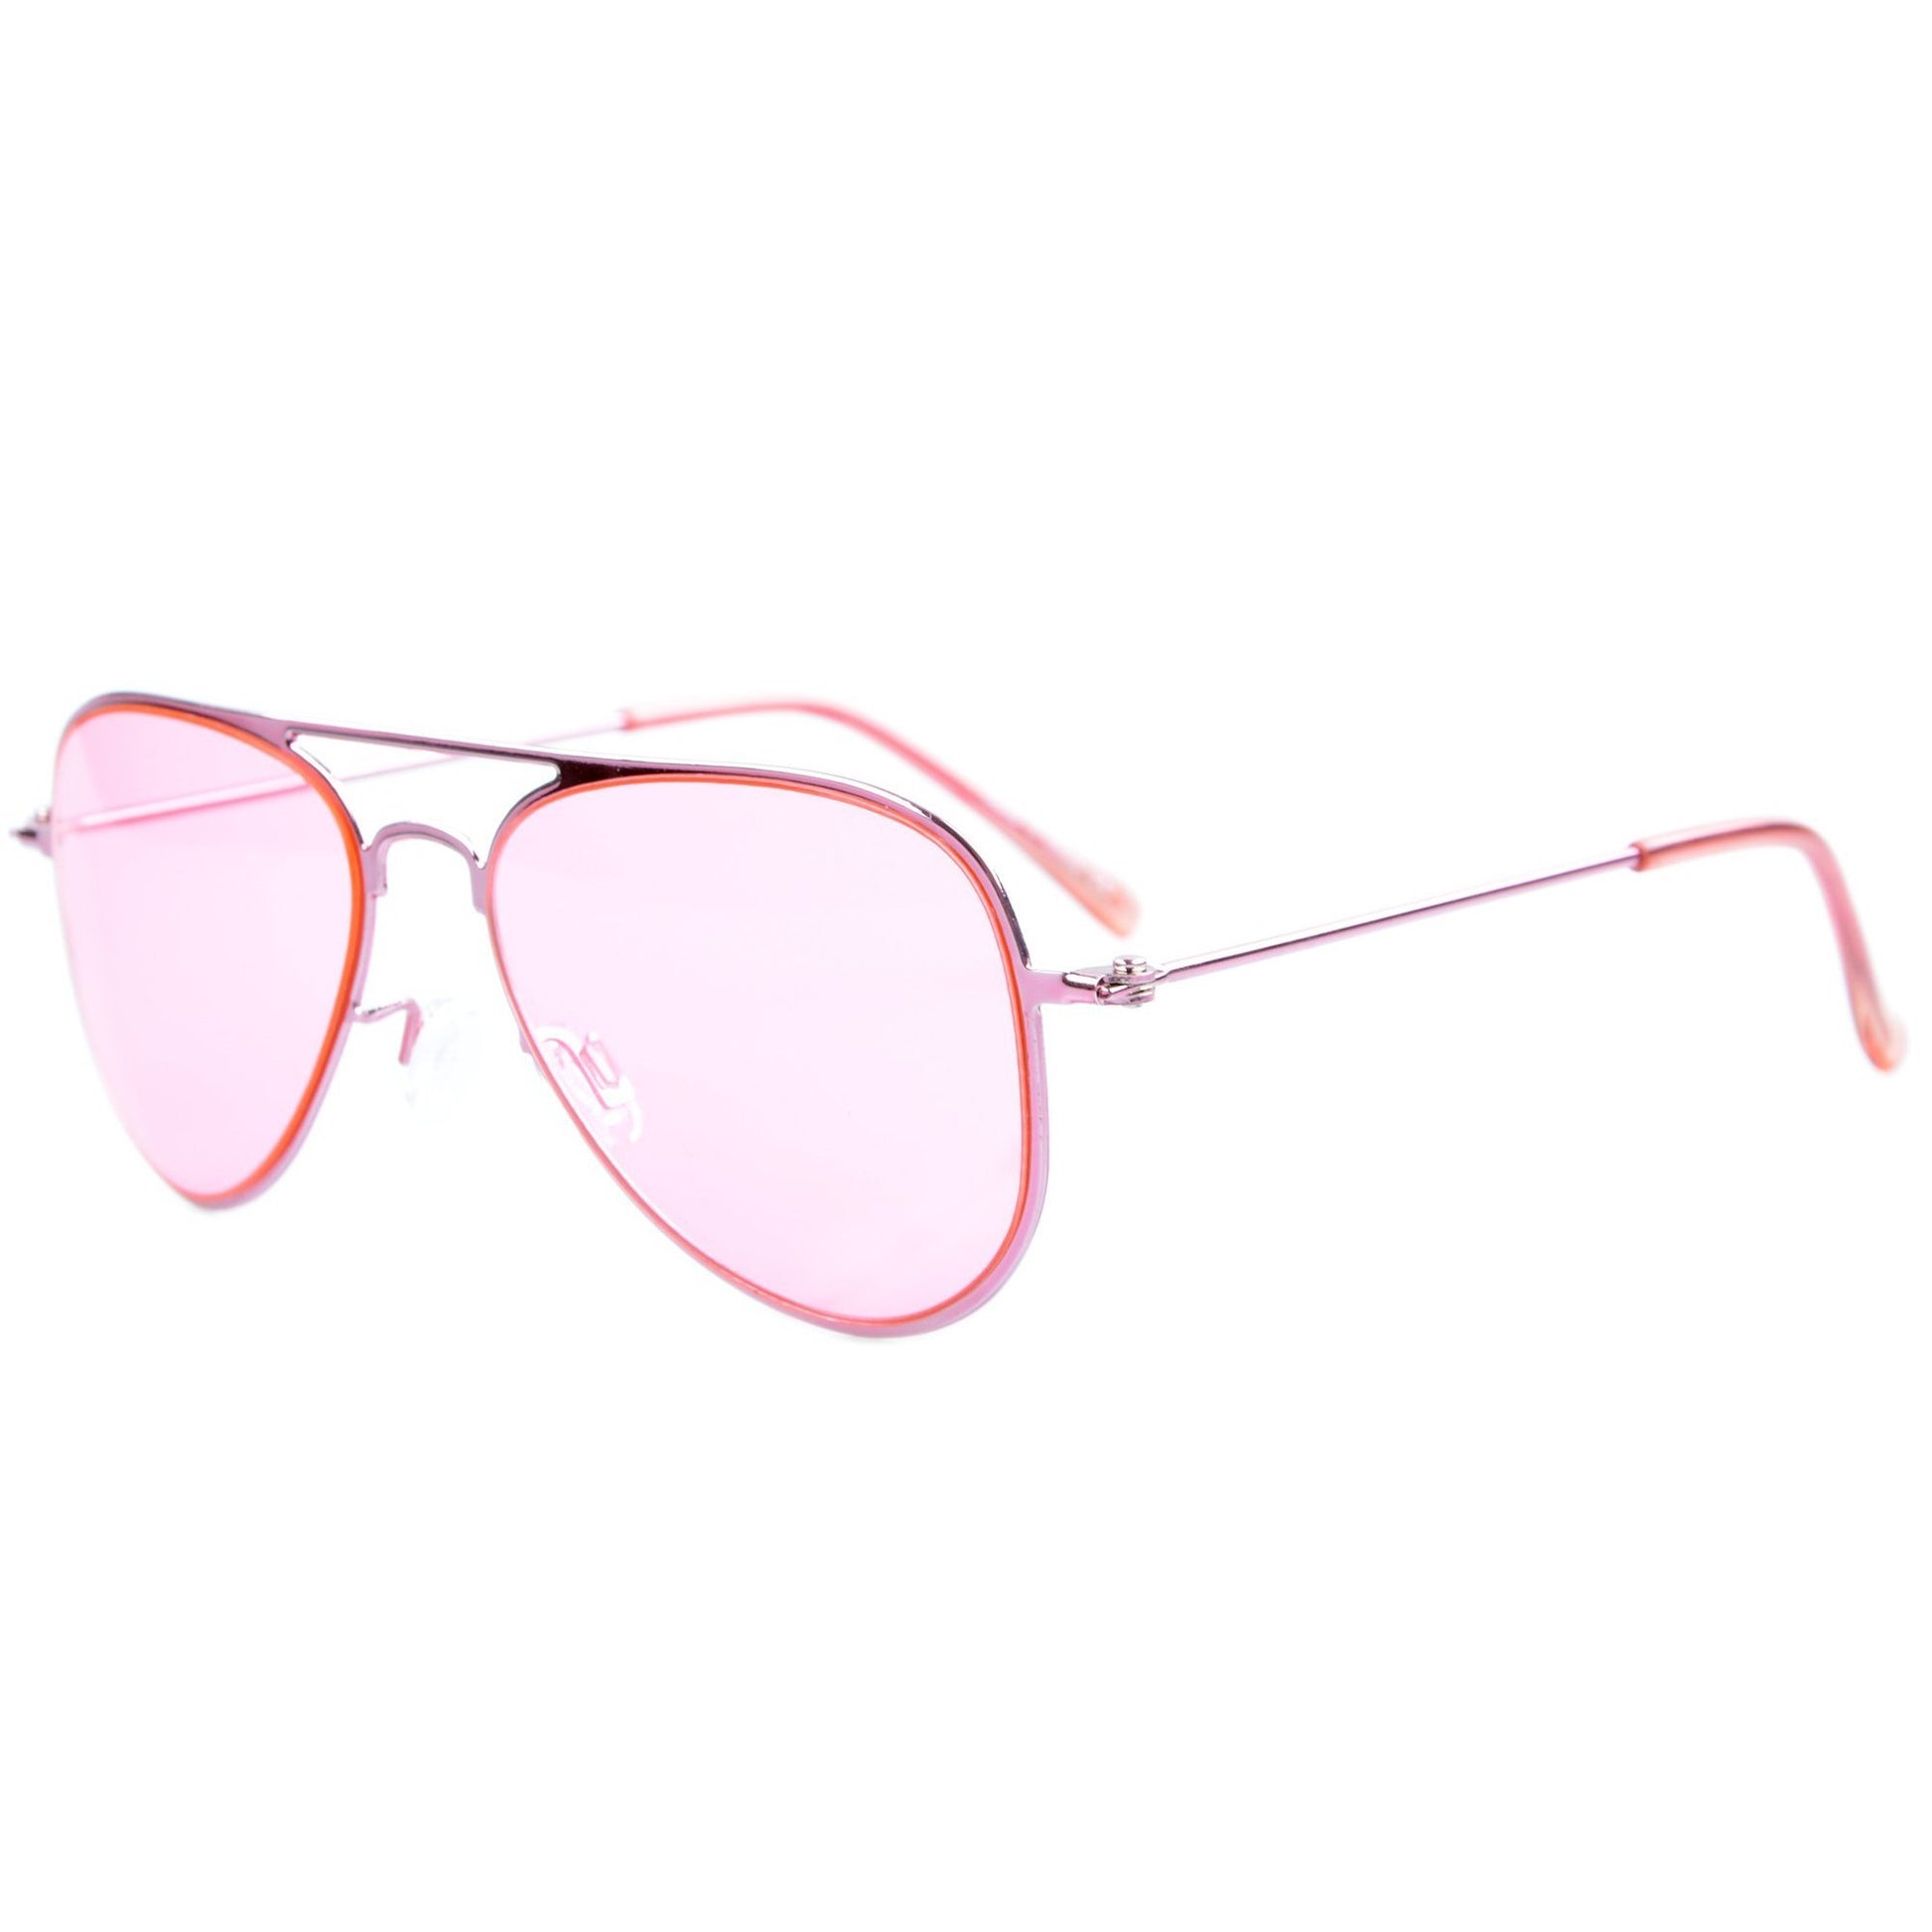 Pilot Sunglasses Pink S15017